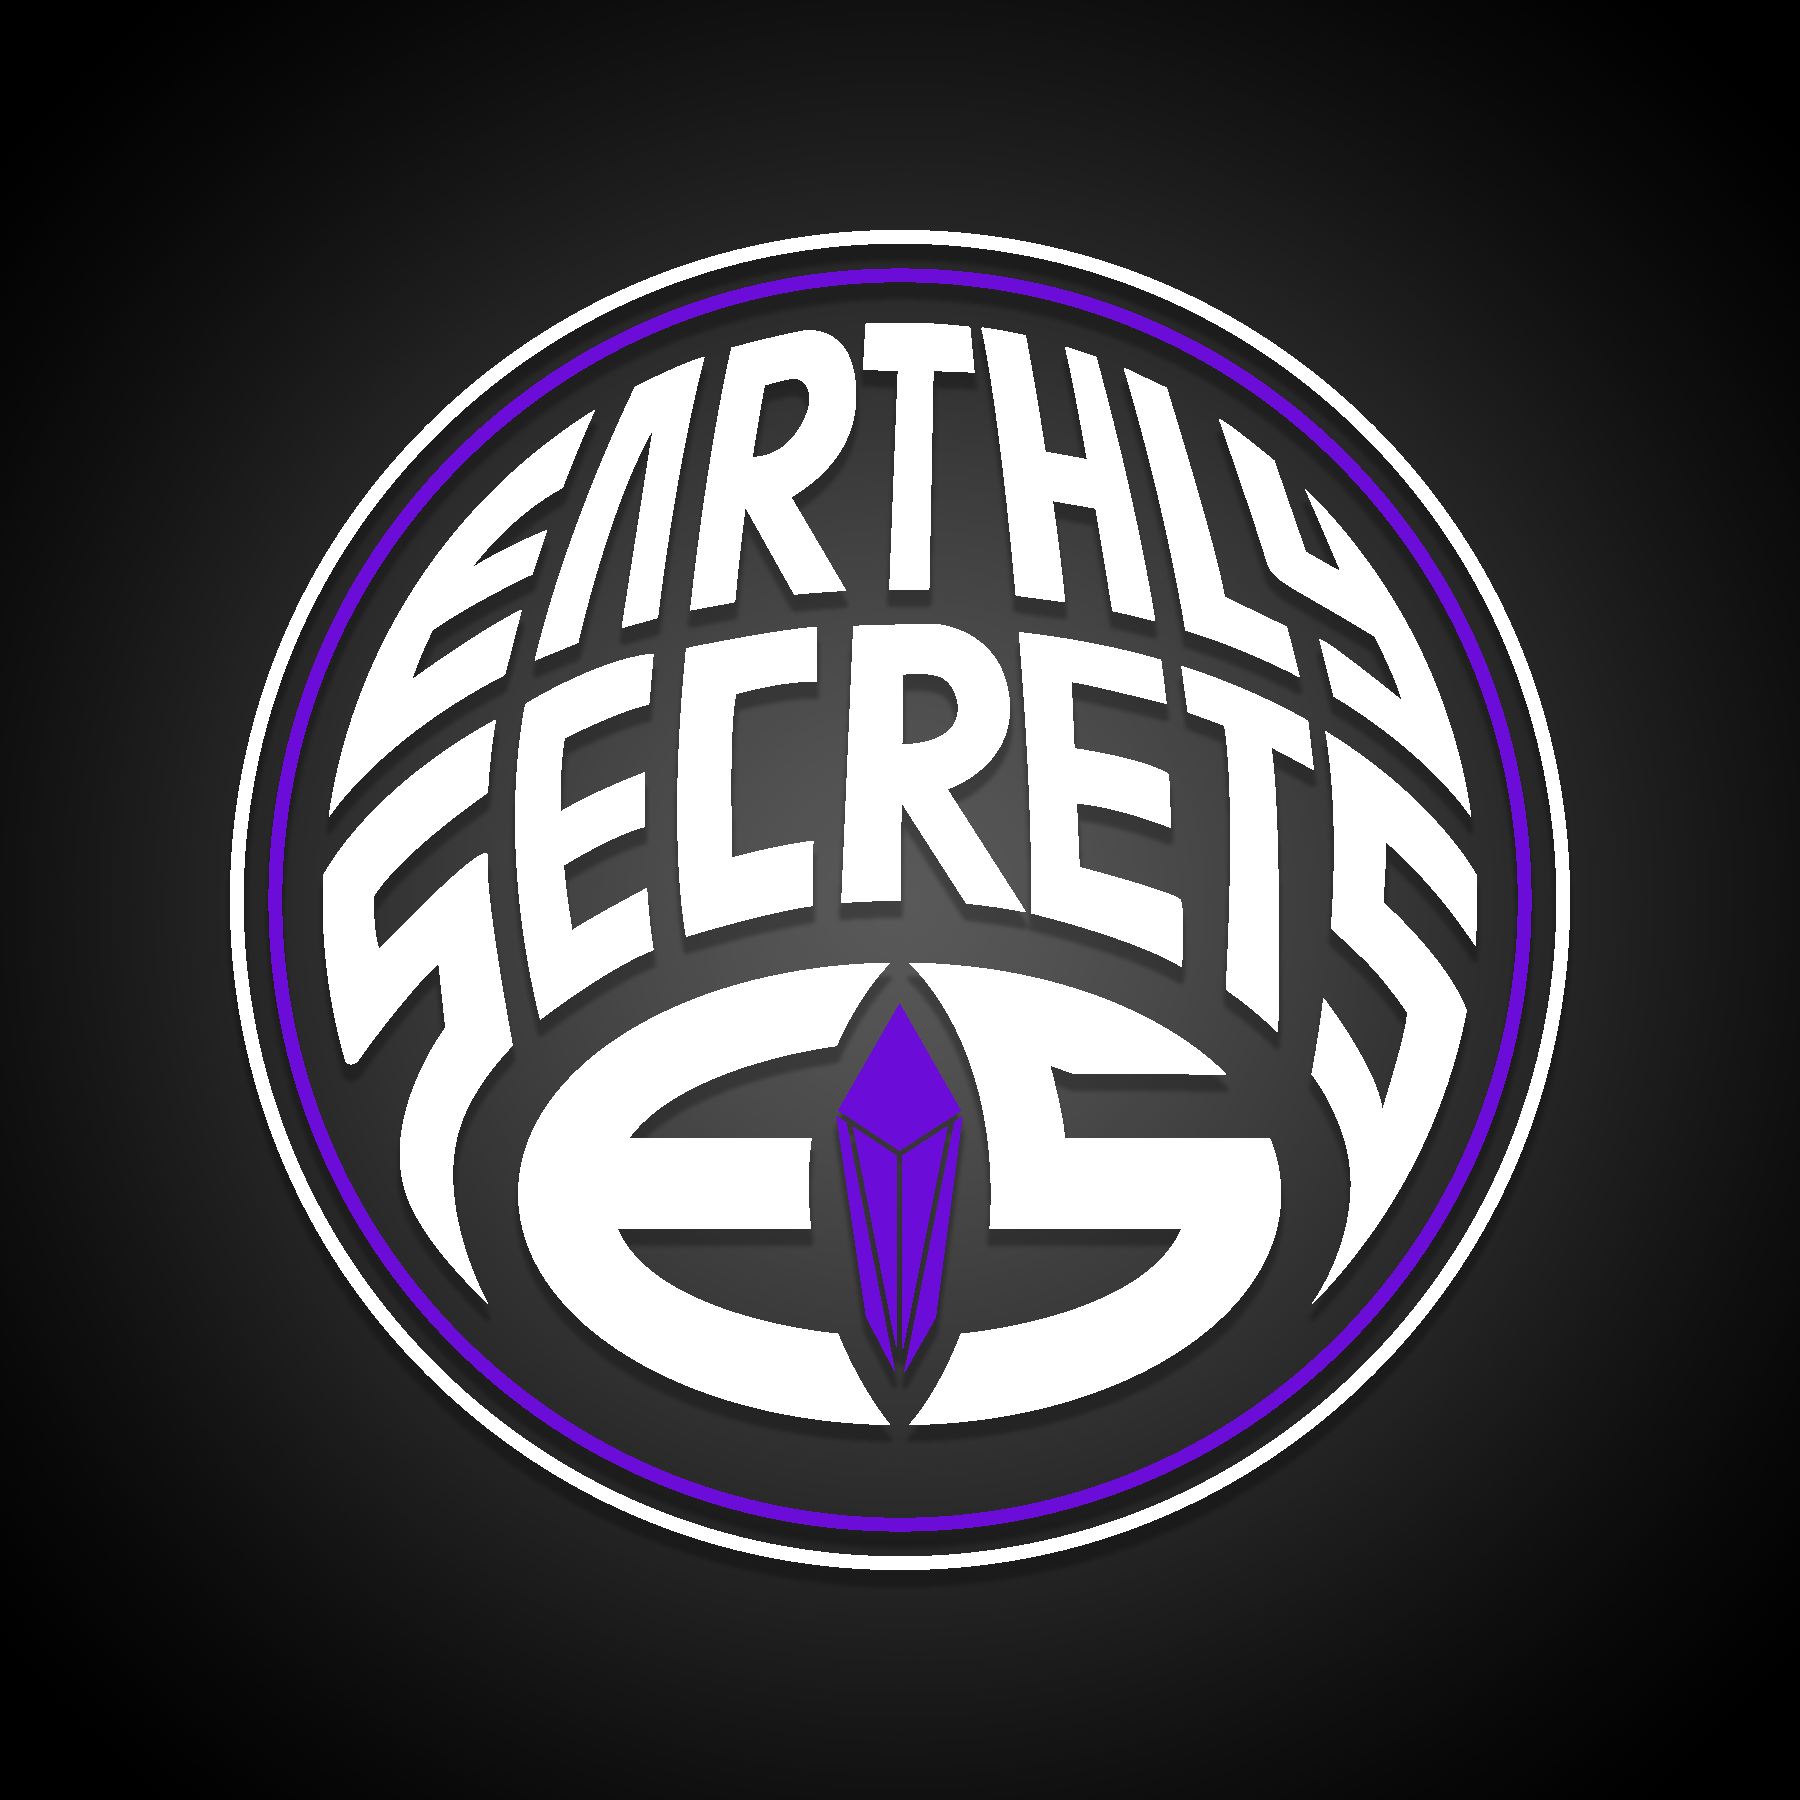 Earthly Secrets Gift Card - Earthly Secrets